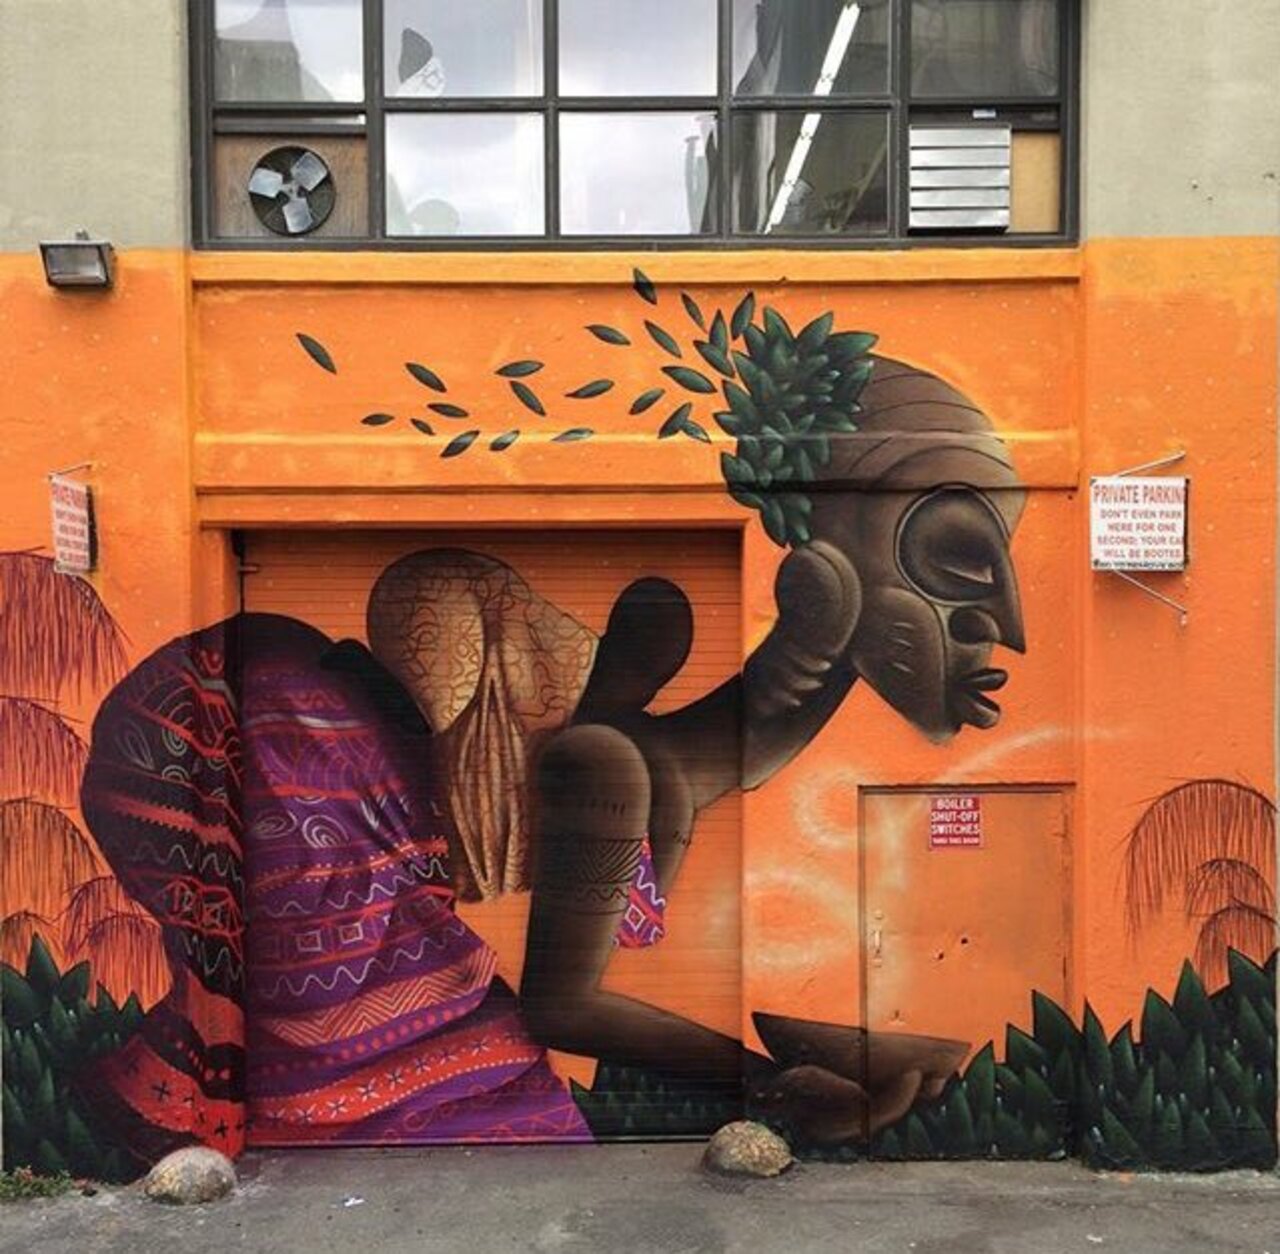 RT @mzajaeh: New Street Art by Alexandre Keto in NYC 

#art #graffiti #mural #streetart https://t.co/nfL7rnbesR